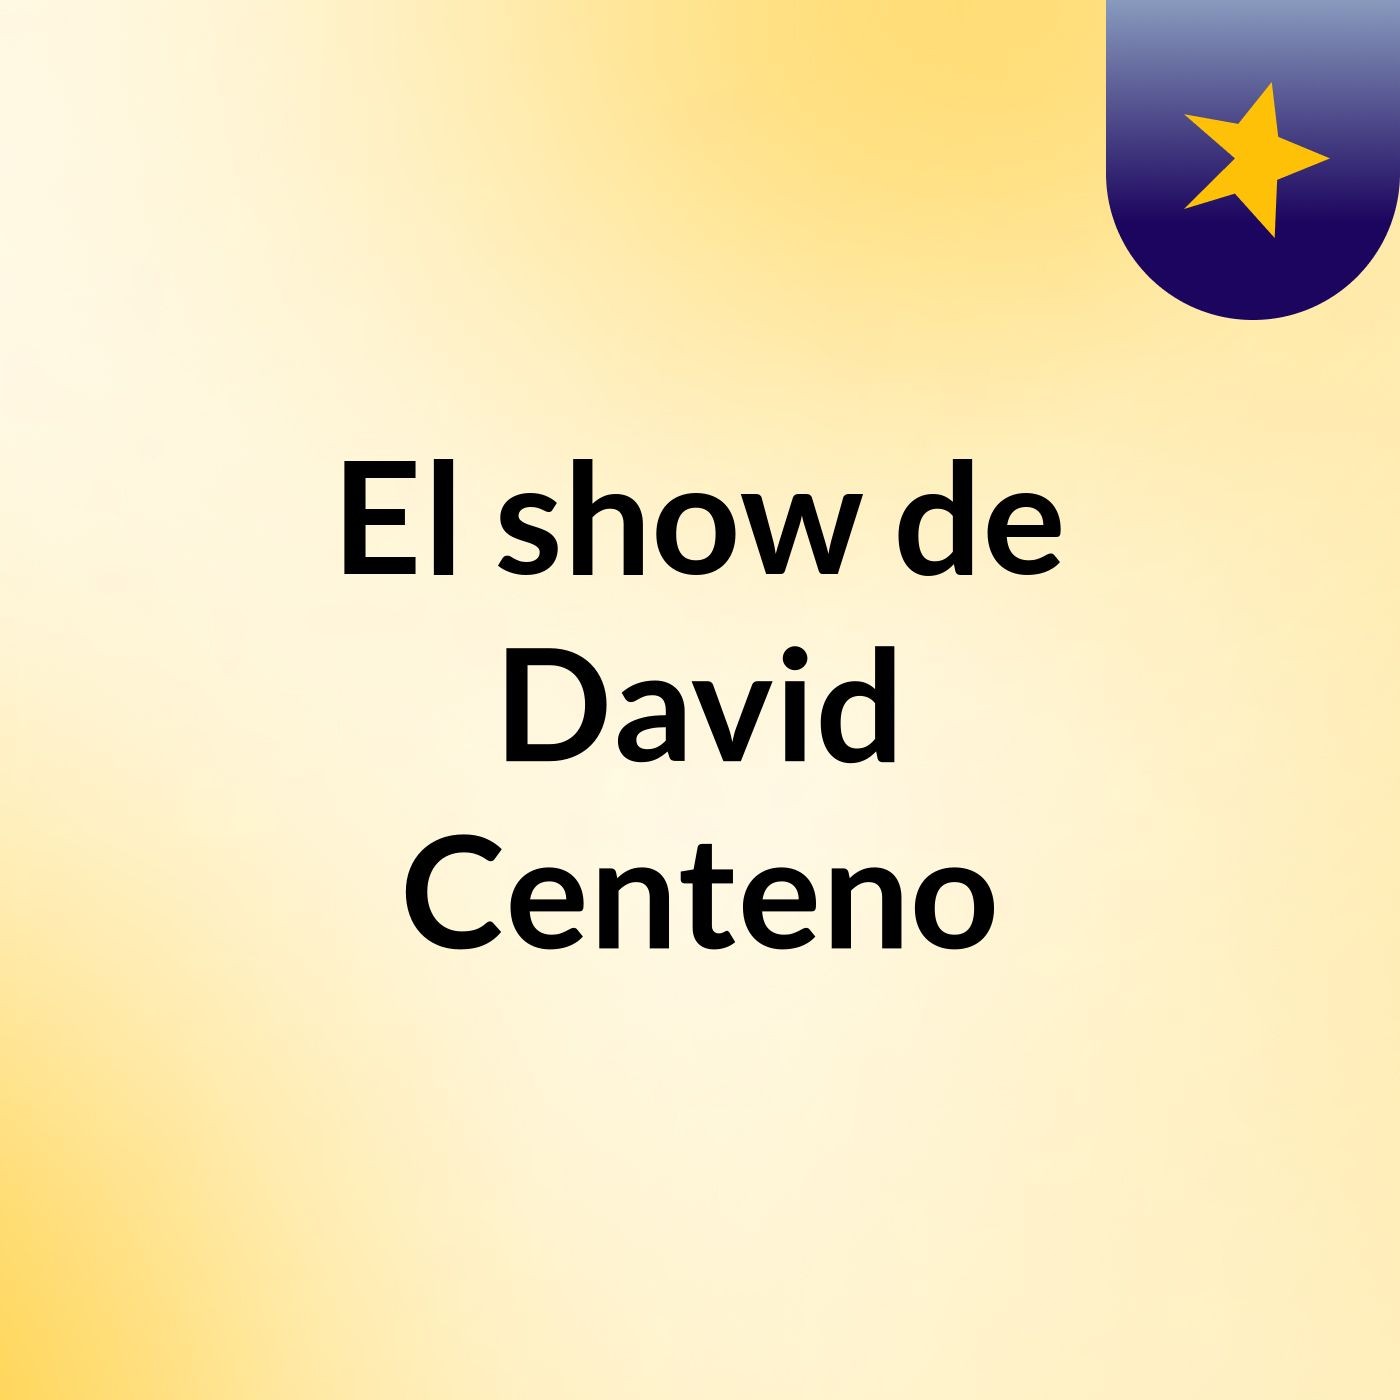 El show de David Centeno